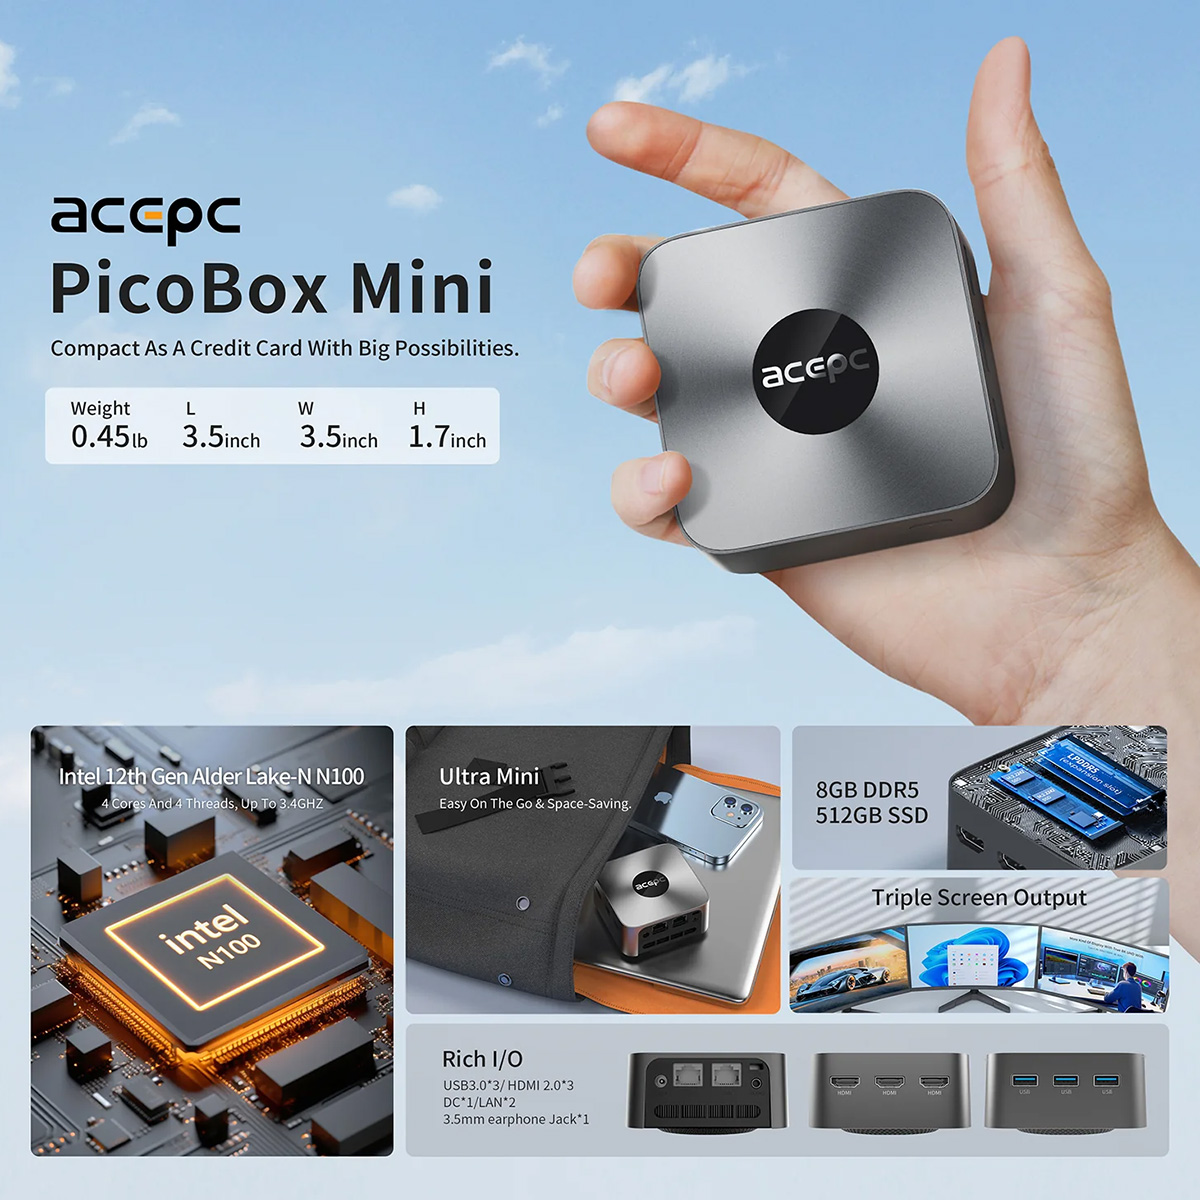 ACEPC PicoBox Mini Marketing